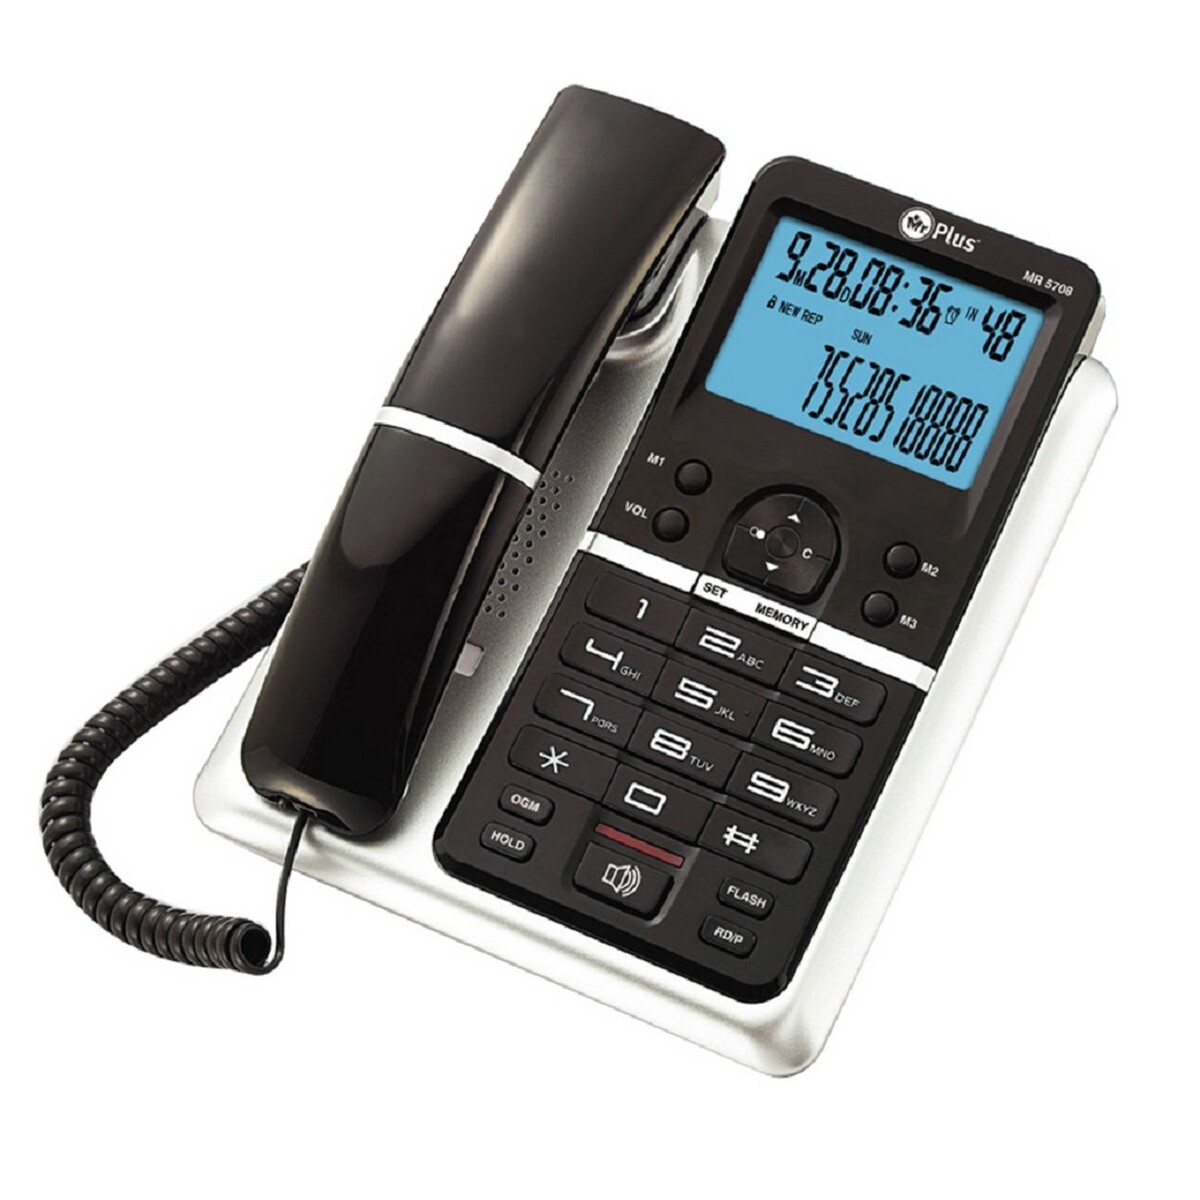 MrPlus Caller ID Phone 5708